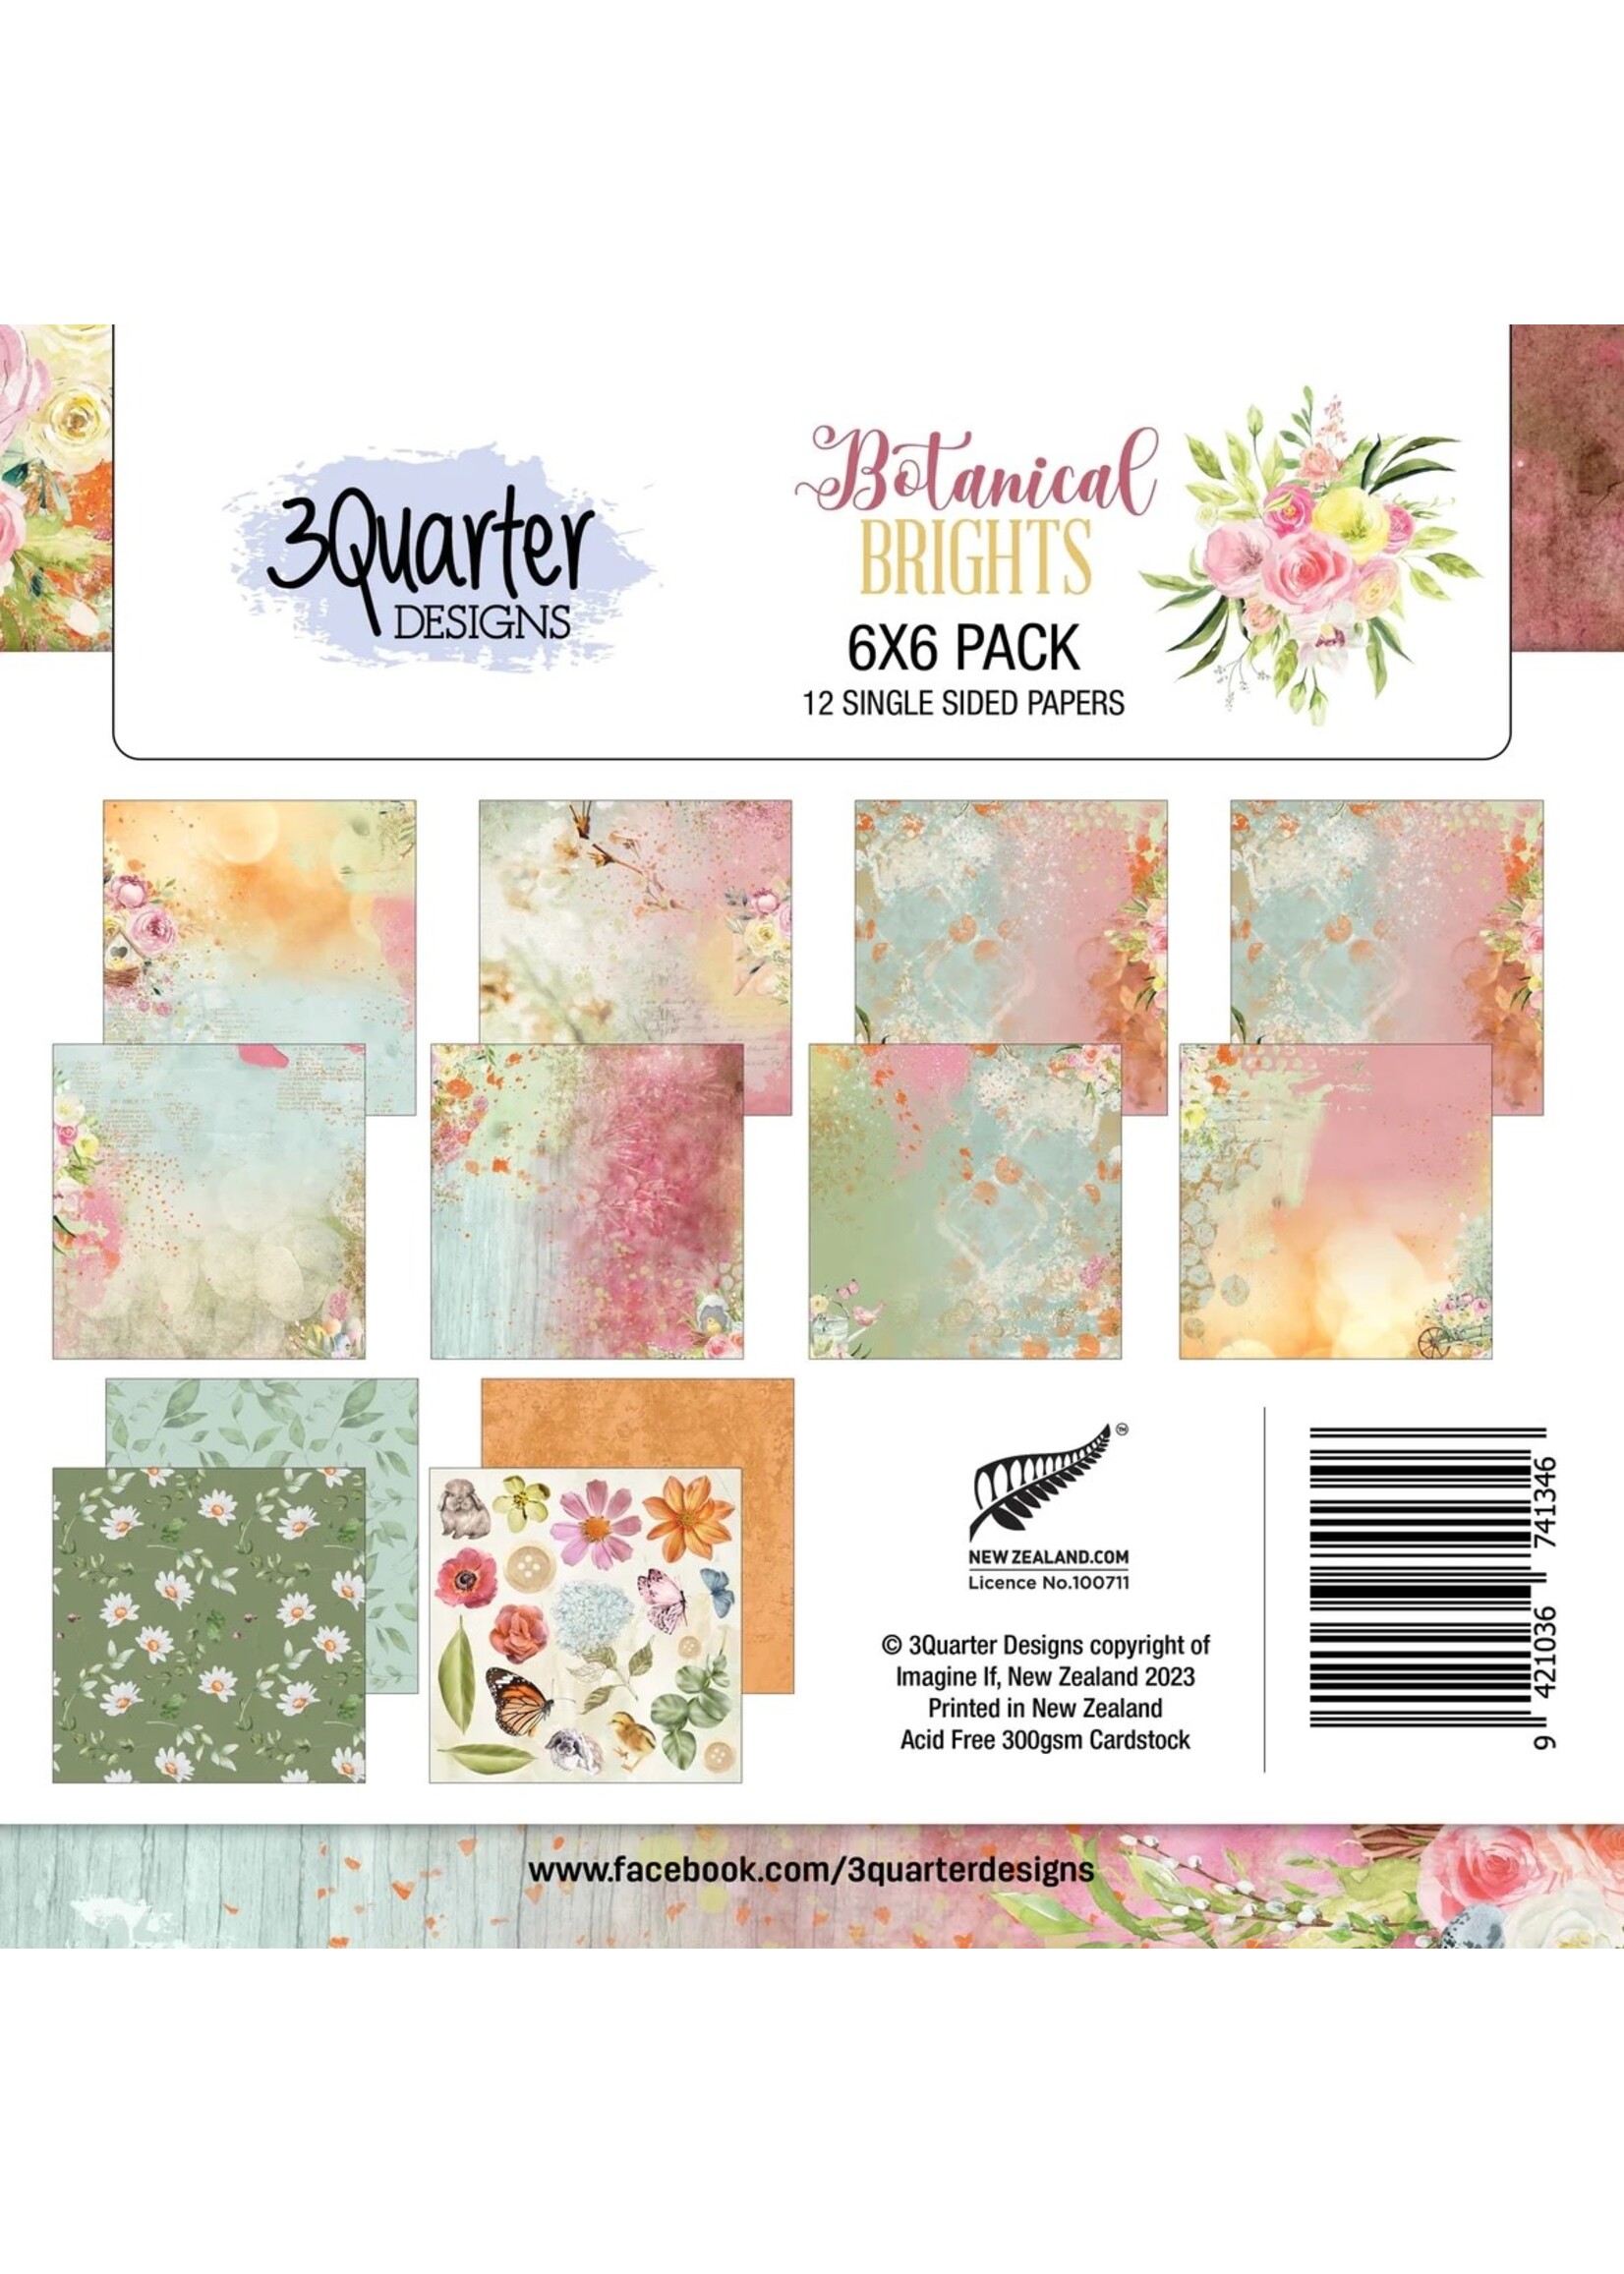 3Quarter Designs Botanical Brights 6x6 Paper Pad